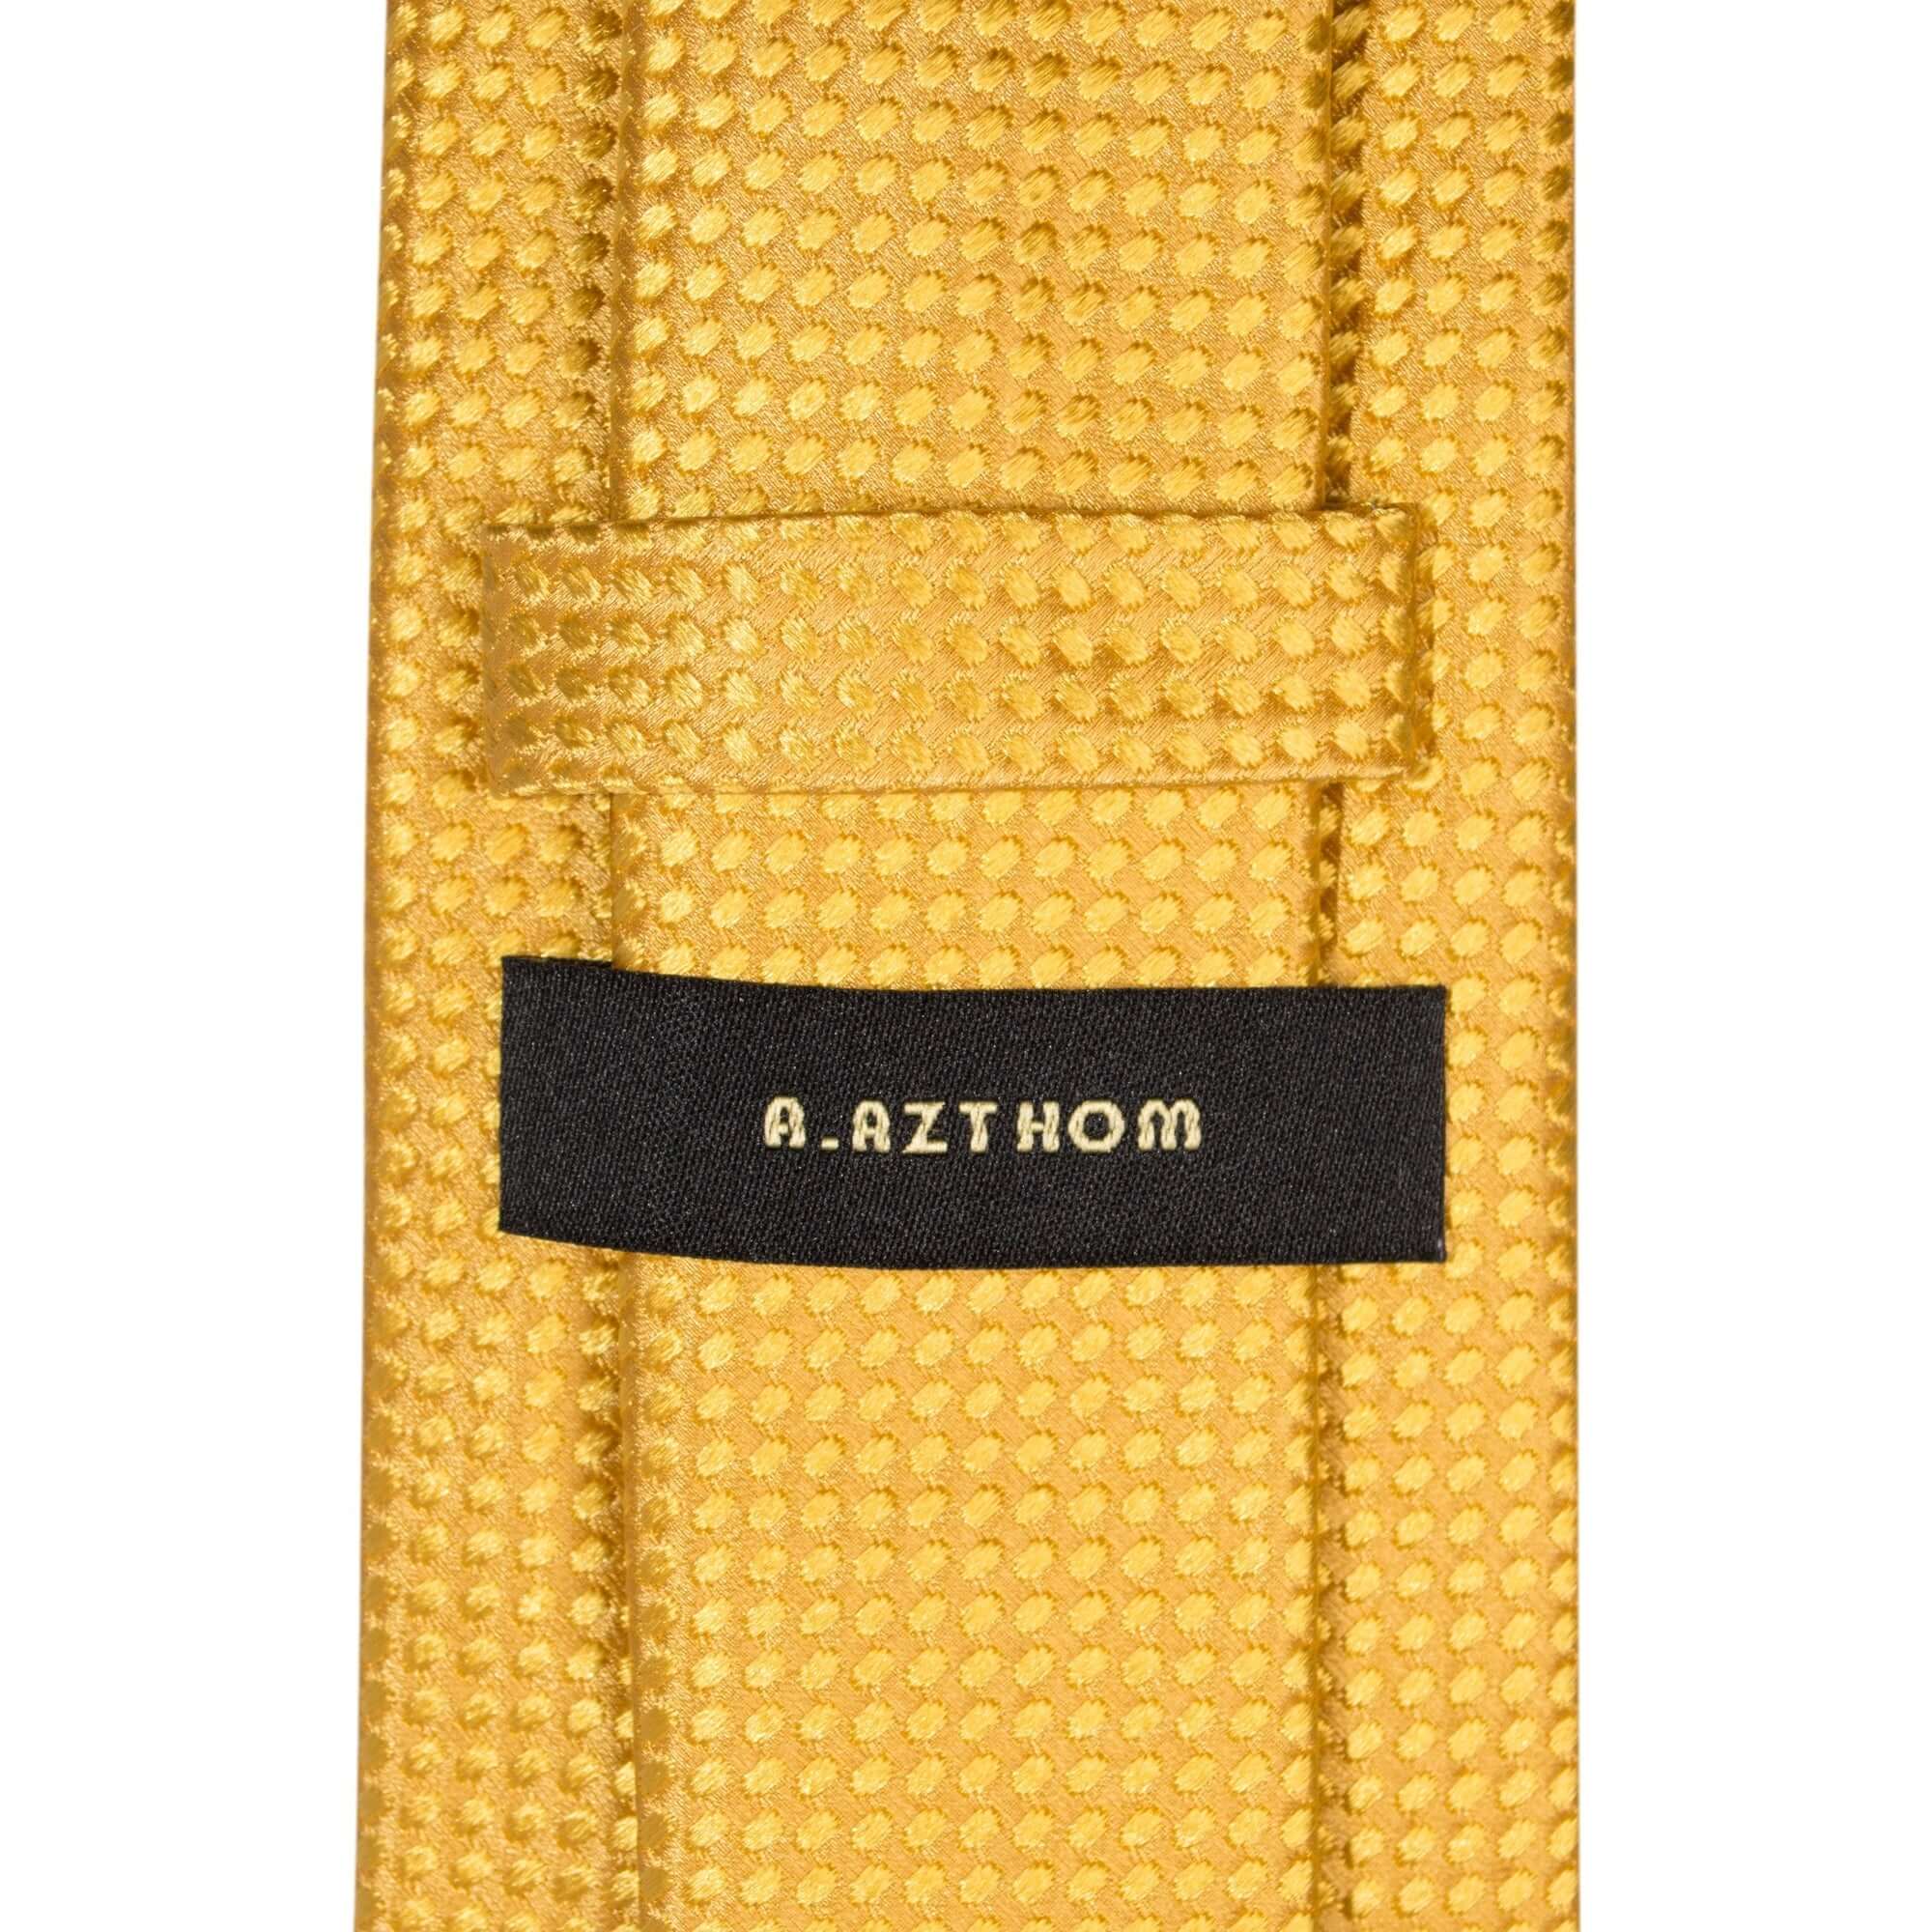 8cm Custard Woven Tie M-Cufflinks.com.sg | Neckties.com.sg